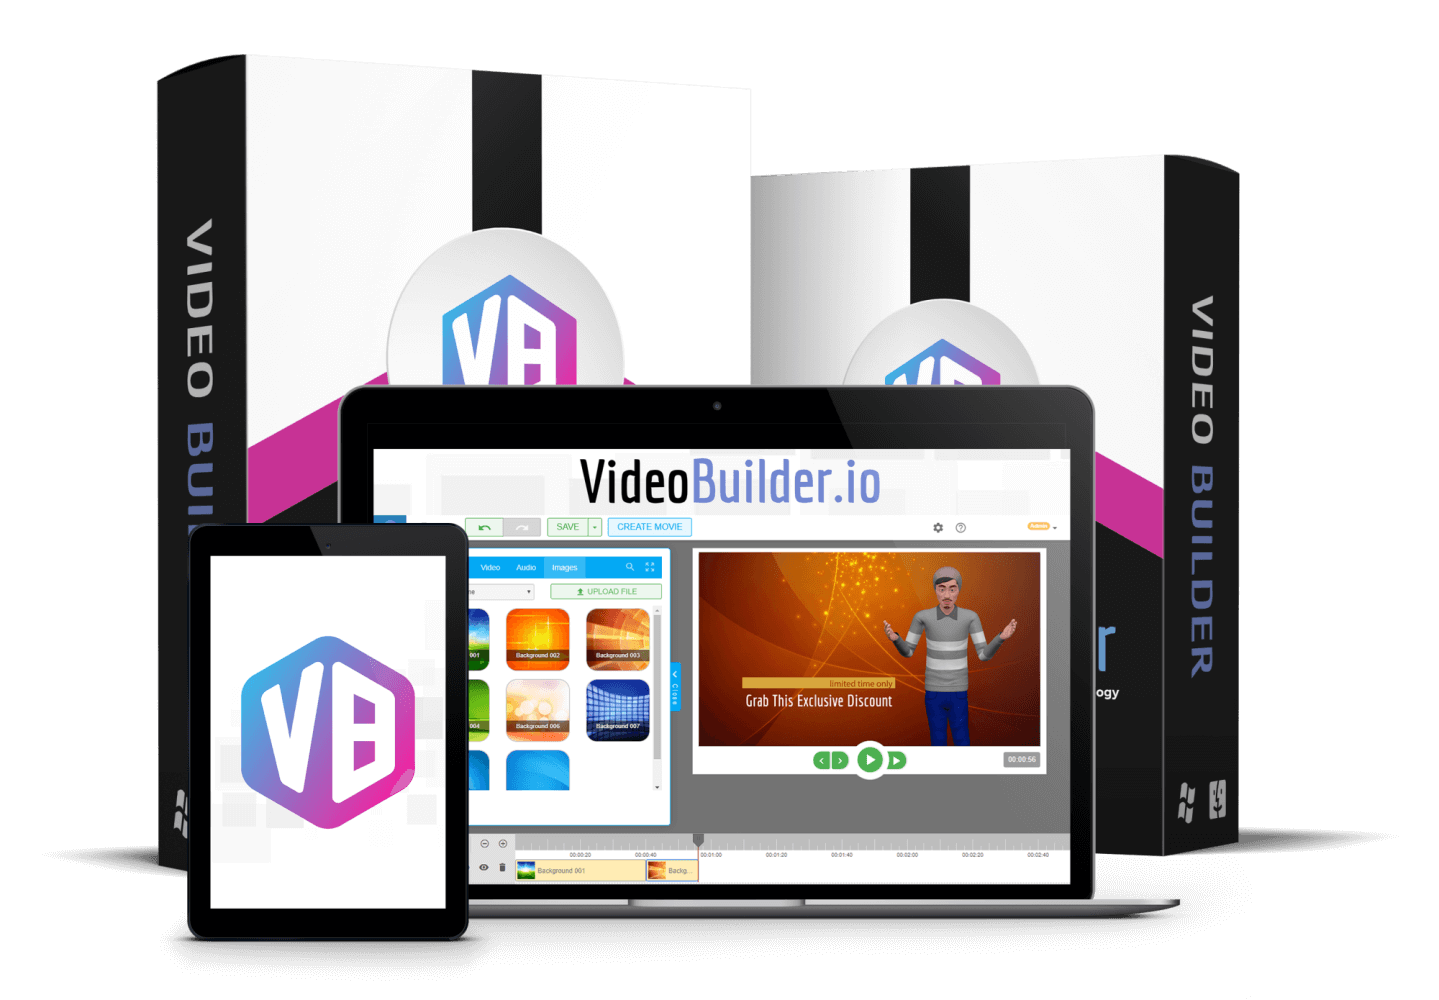 VideoBuilder Review and Bonuses